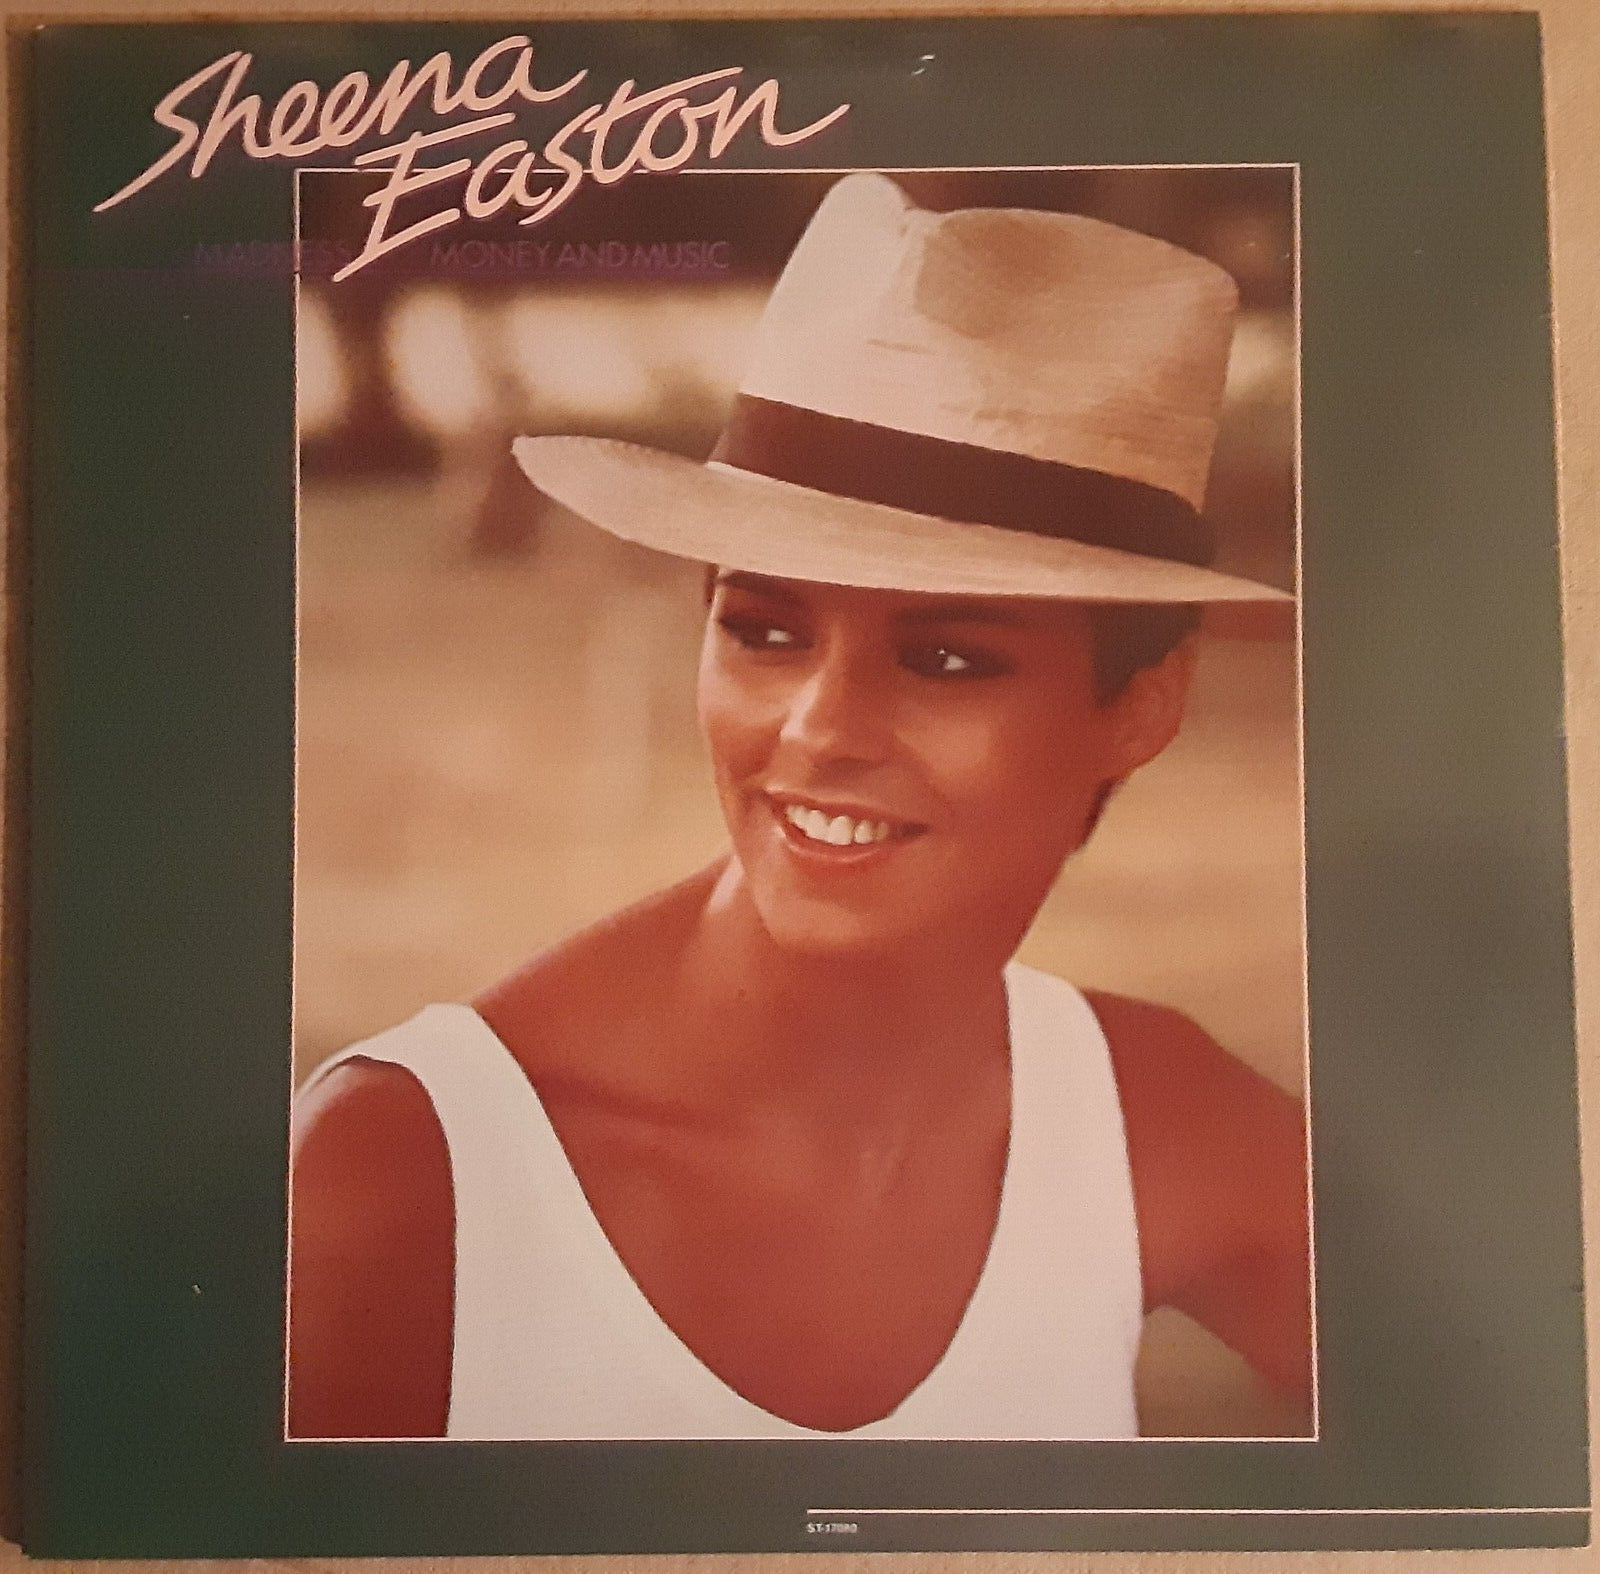 Sheena Easton Madness, Money And Music 1982 vinyl LP EMI America ST-17080